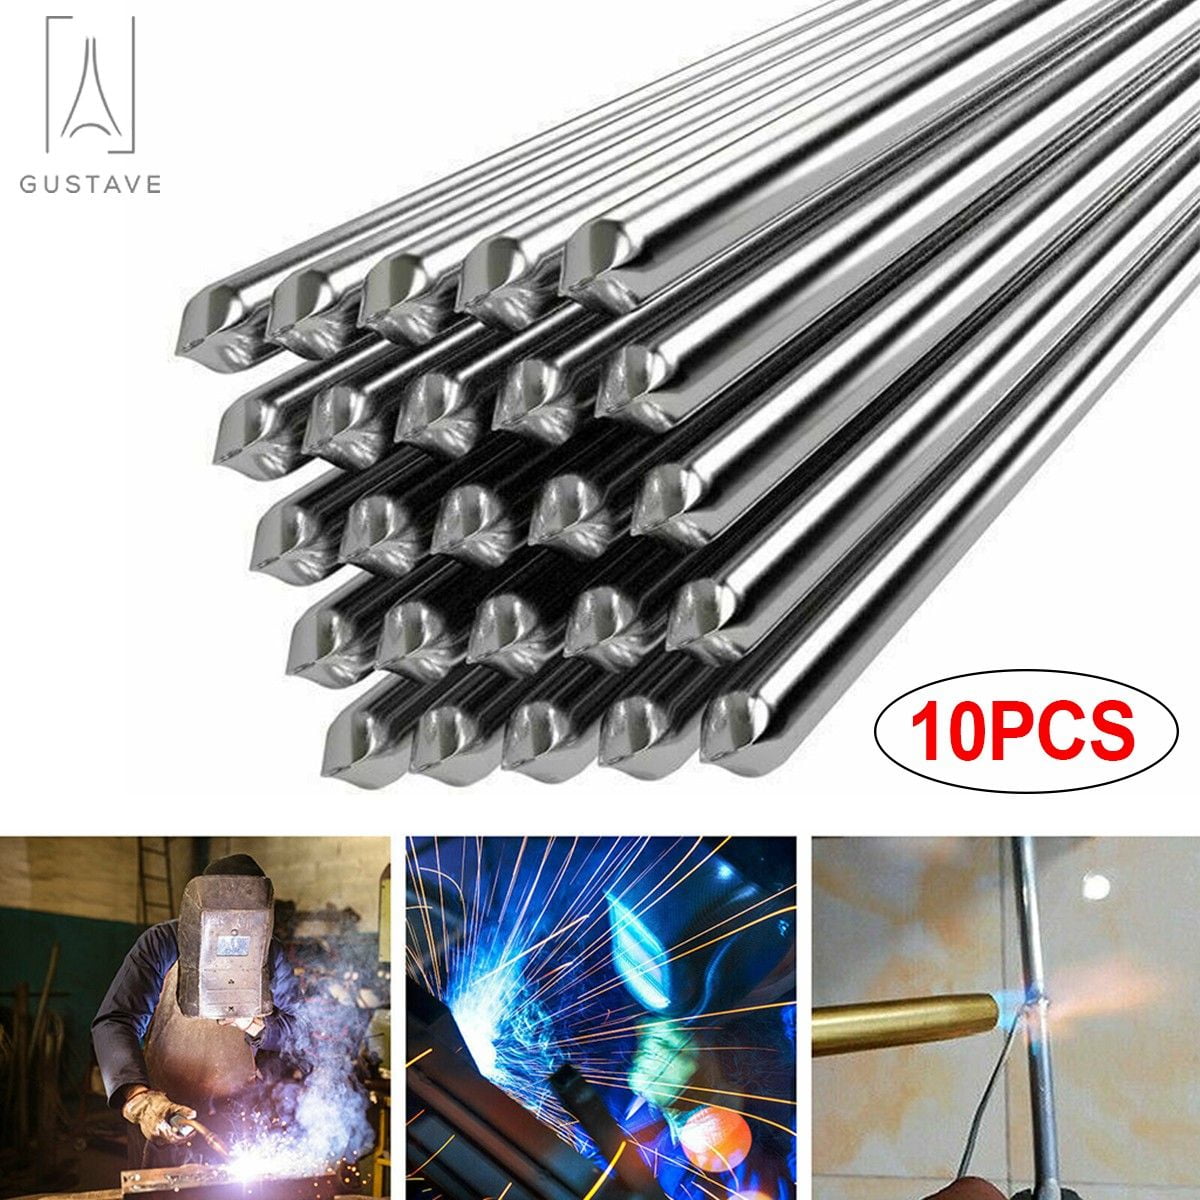 10PCS Alumifix™ Super Melt Flux Cored Aluminum Easy Welding Rods High Quality 